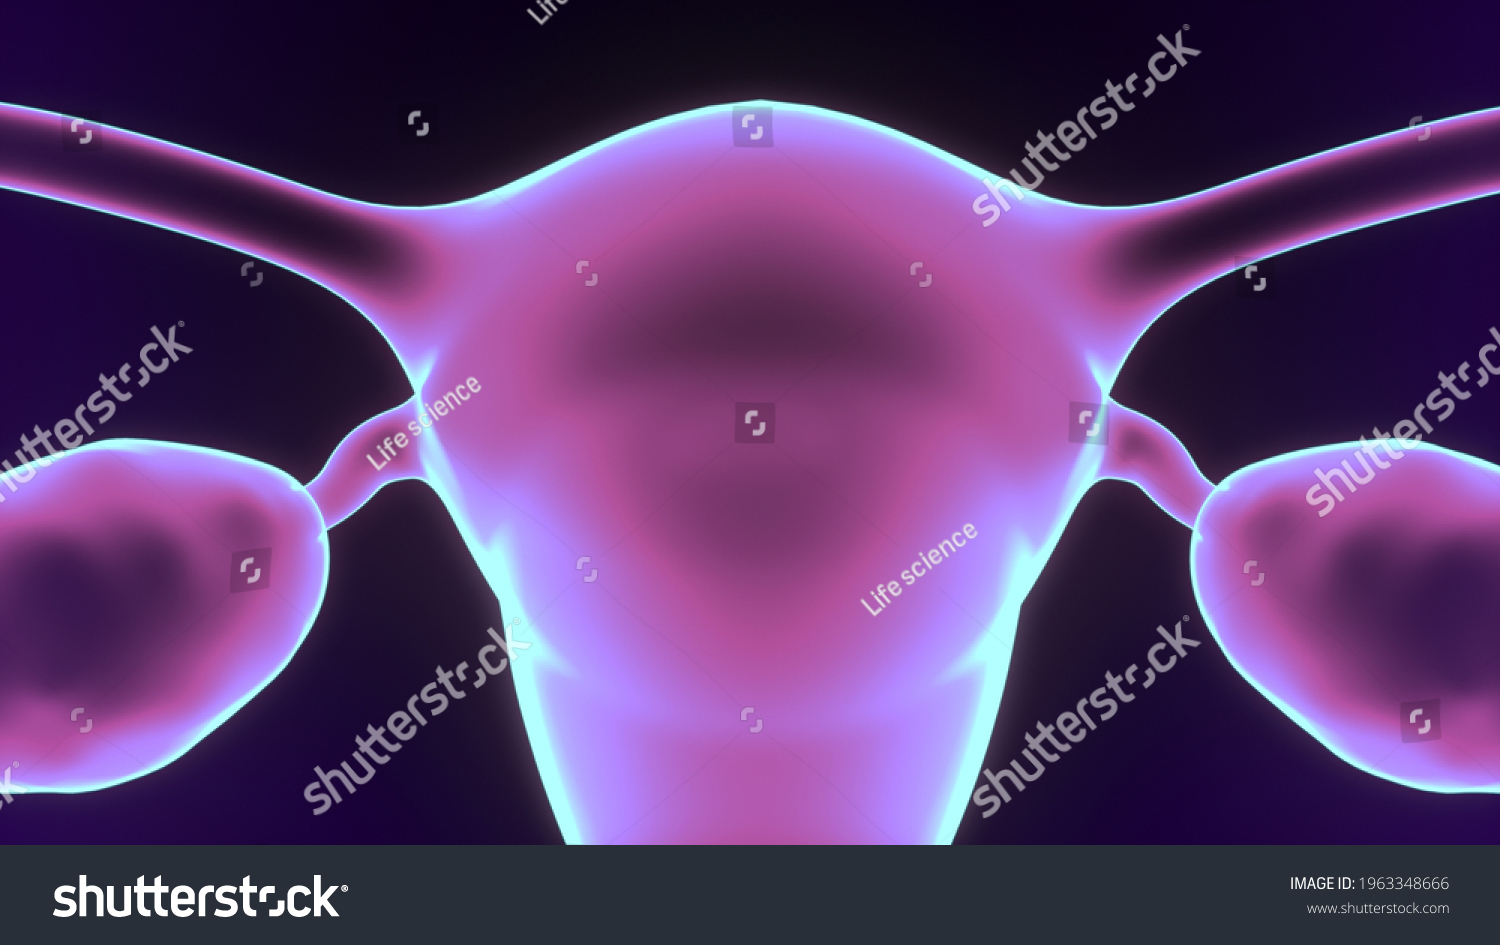 Female Reproductive System Anatomy 3d Illustration Stock Illustration 1963348666 Shutterstock 0503